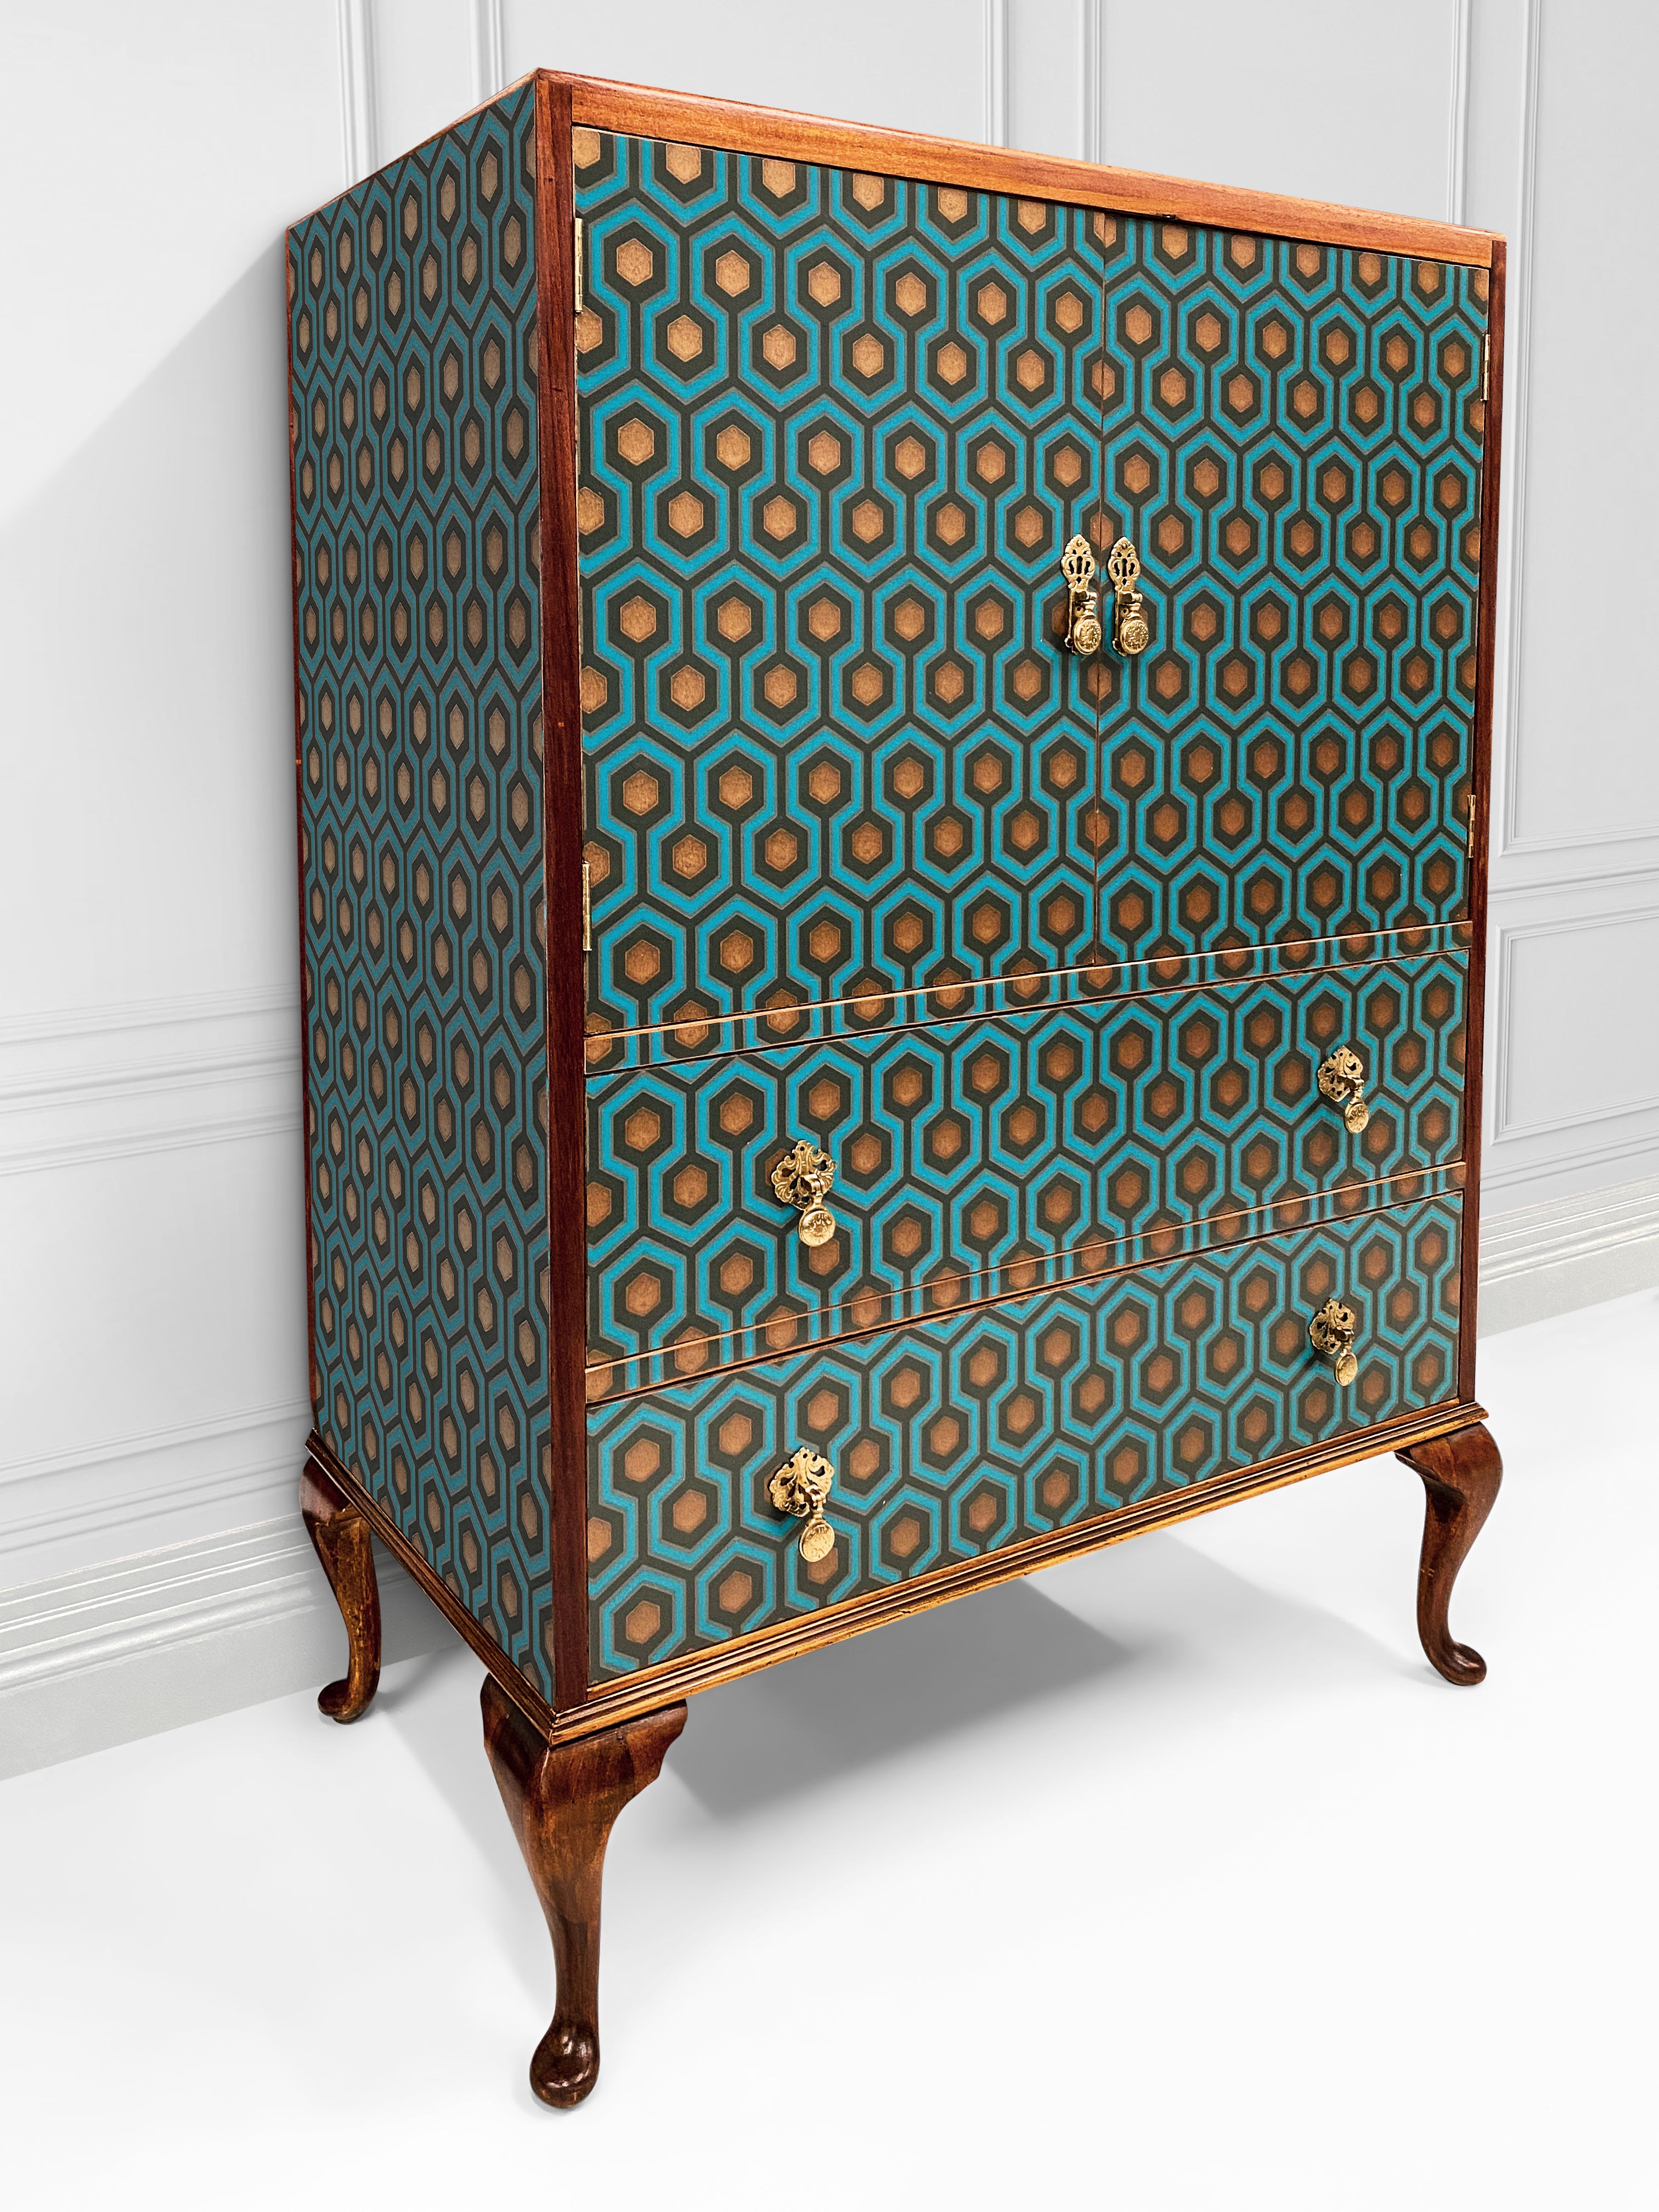 Upcycled Vintage Cabinet Geometric Design